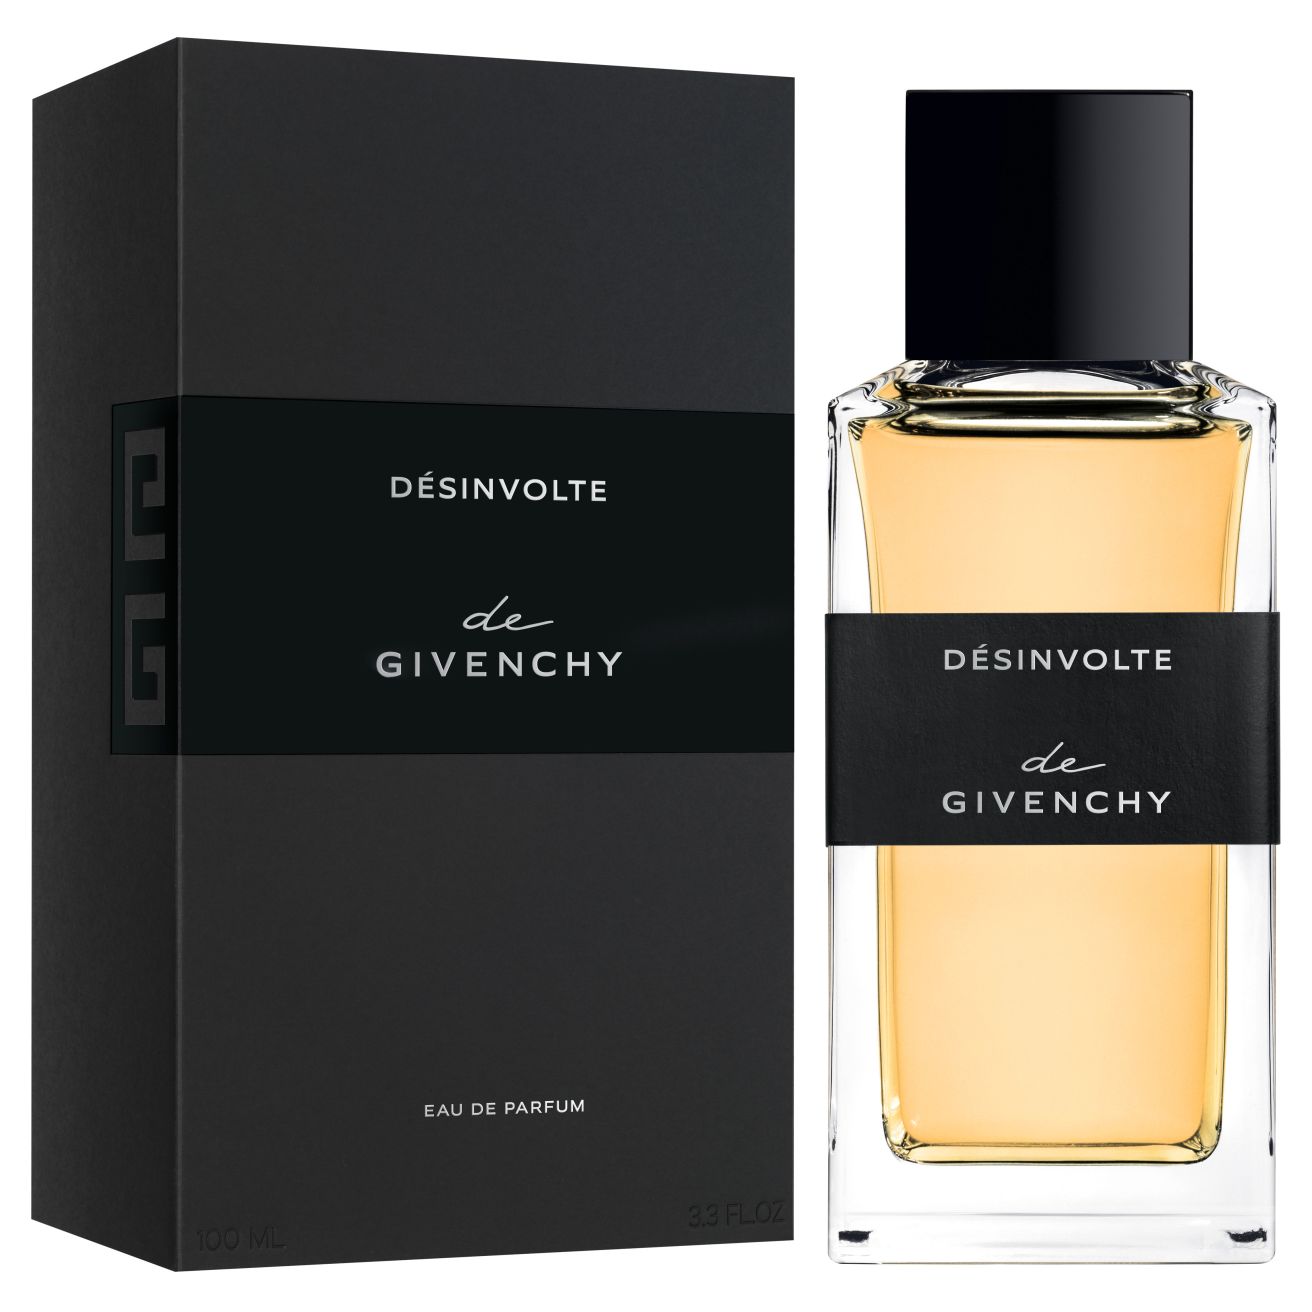 Givenchy Gentleman Society Eau de Parfum. Gentleman Society Eau de Parfum extrême Givenchy. Givenchy Gentleman Society.